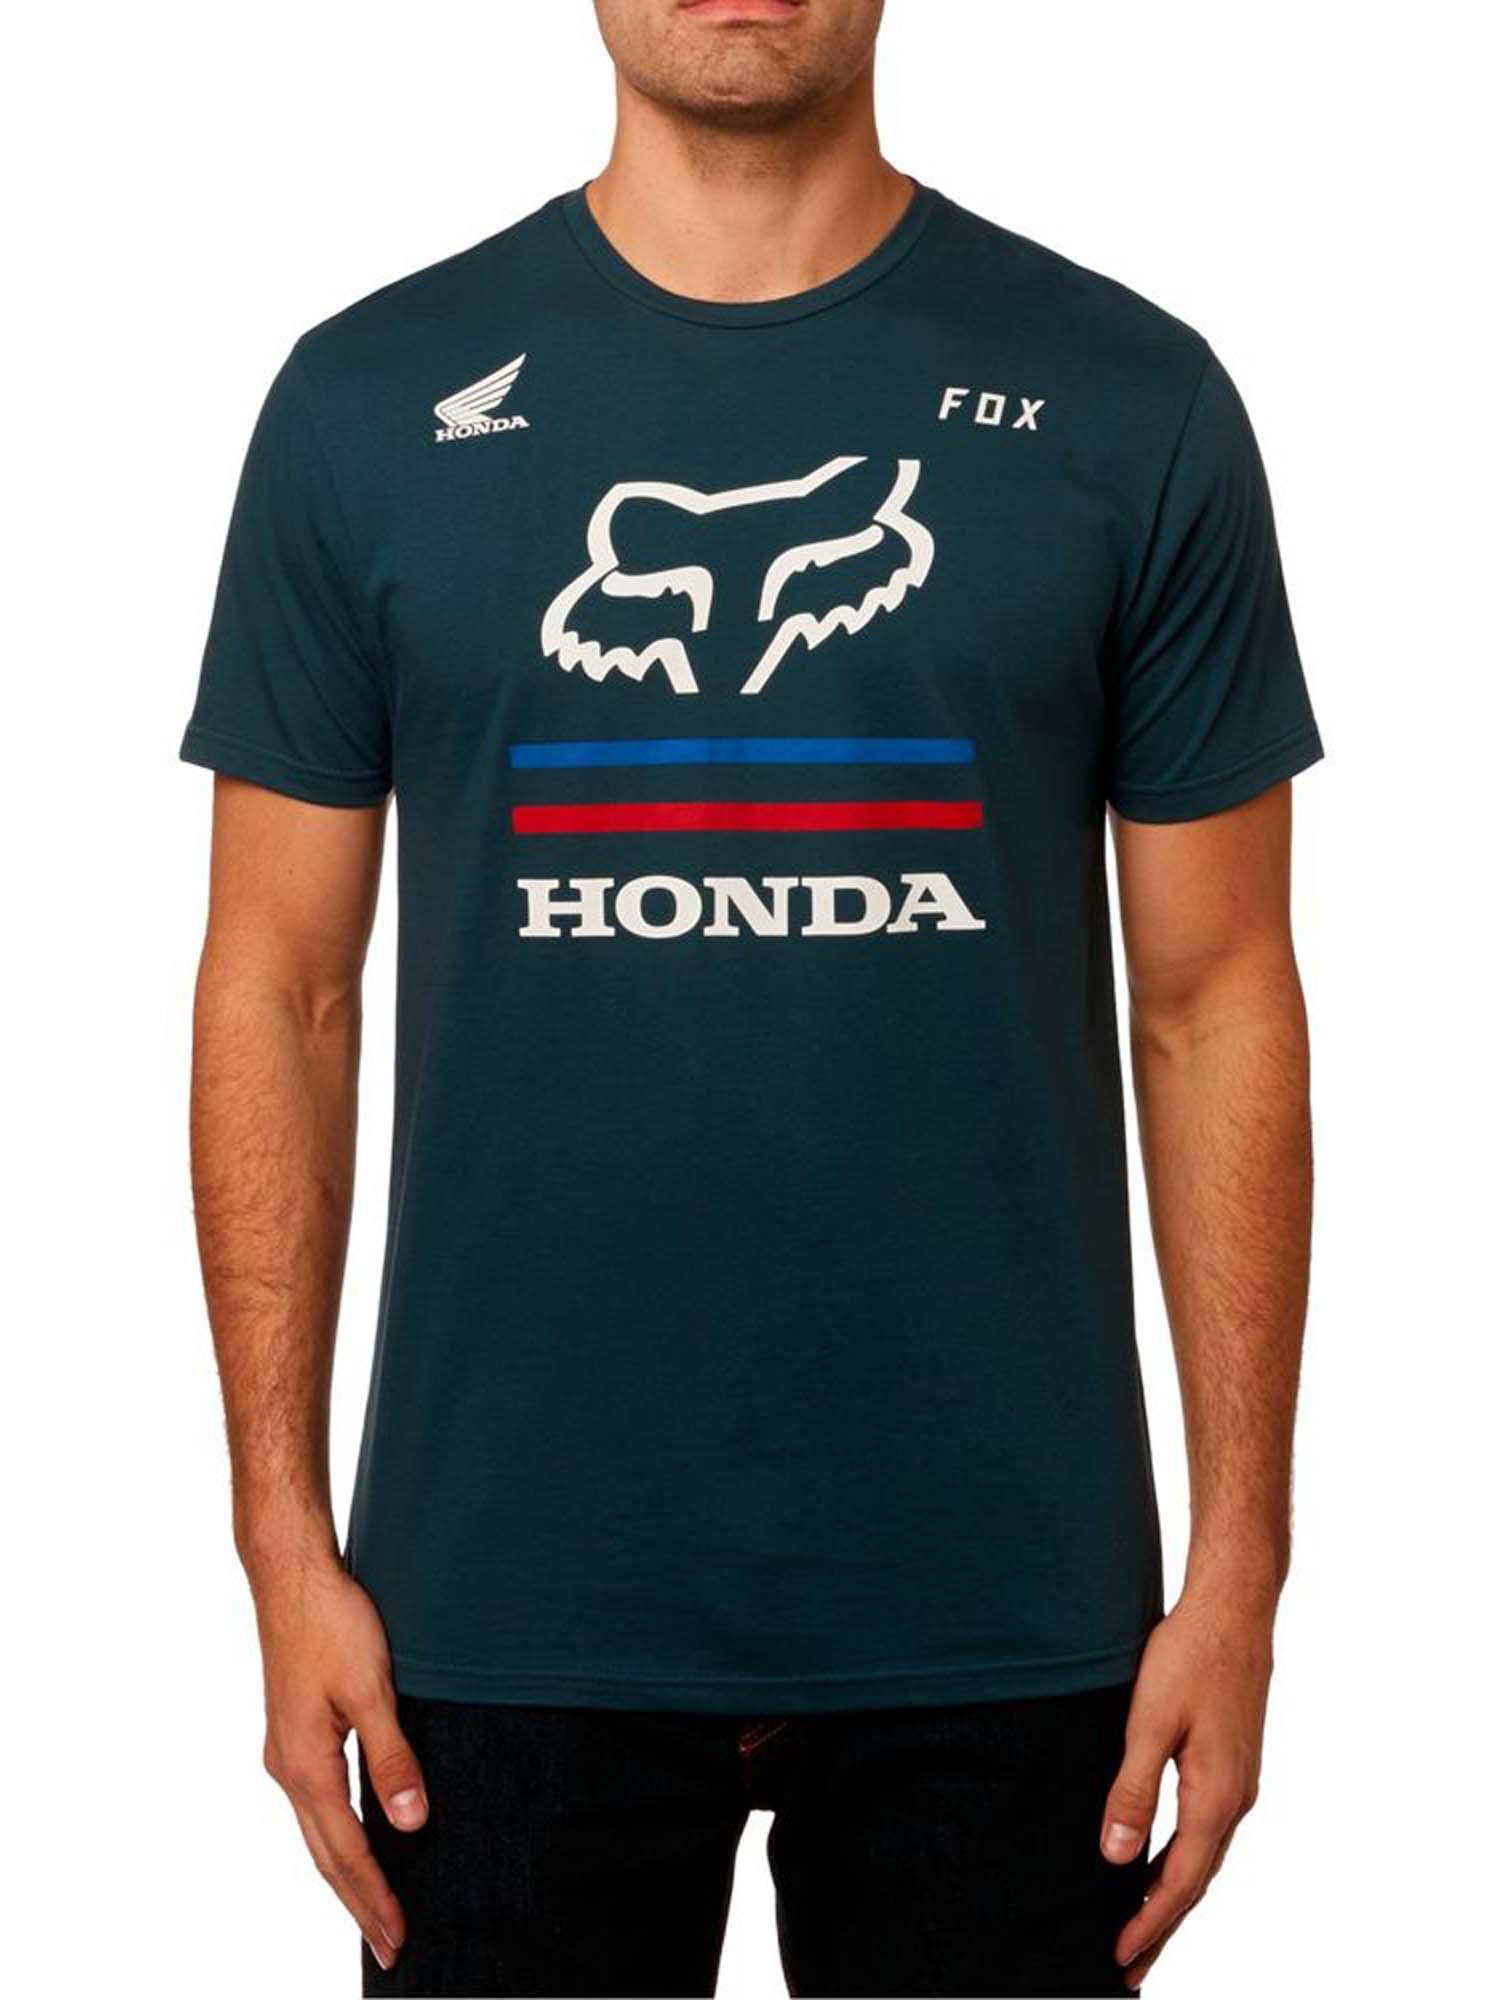 Haiku life Banquet Fox Racing Men's Honda Short Sleeve Premium T-shirt - Walmart.com